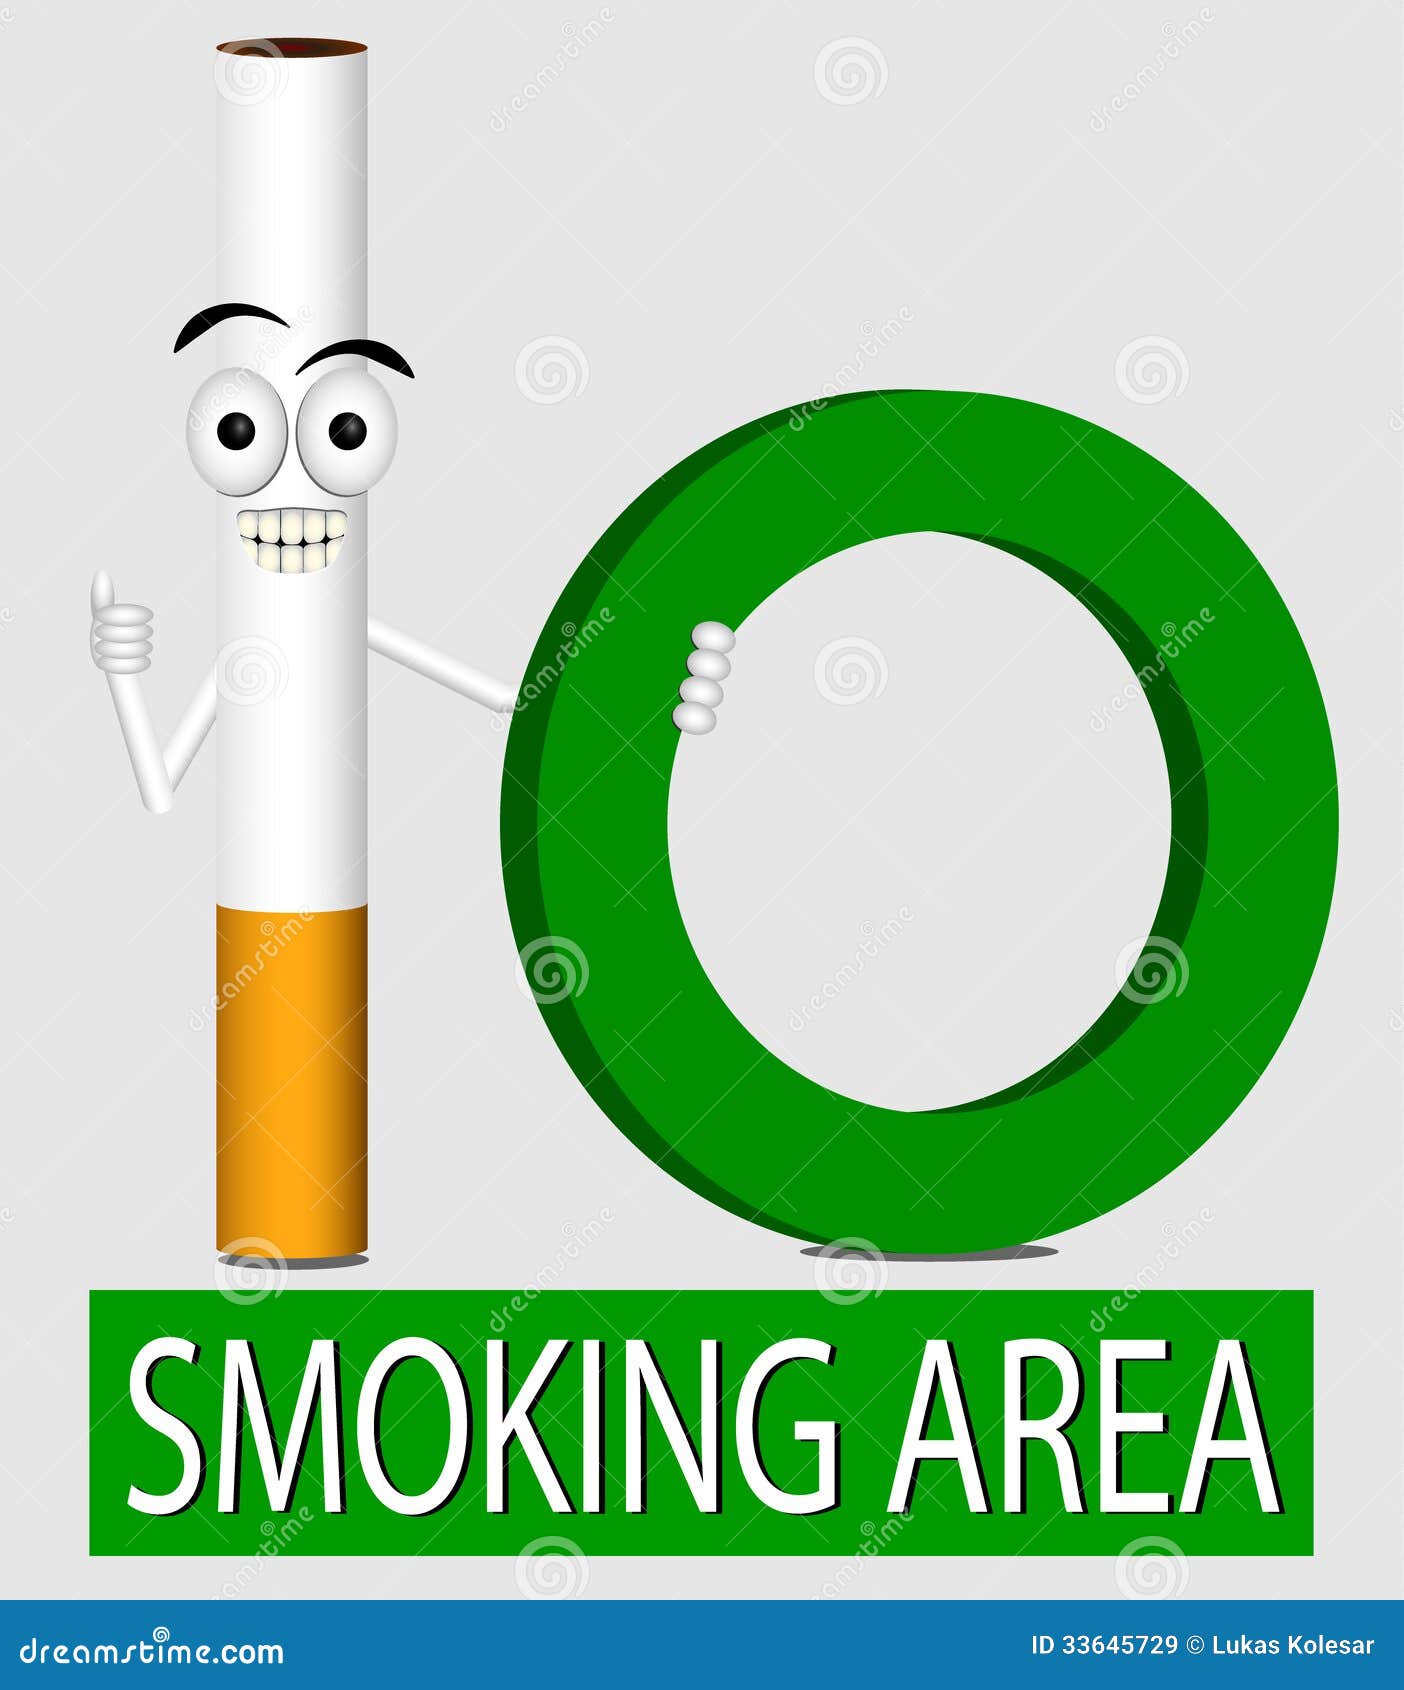 Smoking area stock illustration. Illustration of healthcare - 33645729